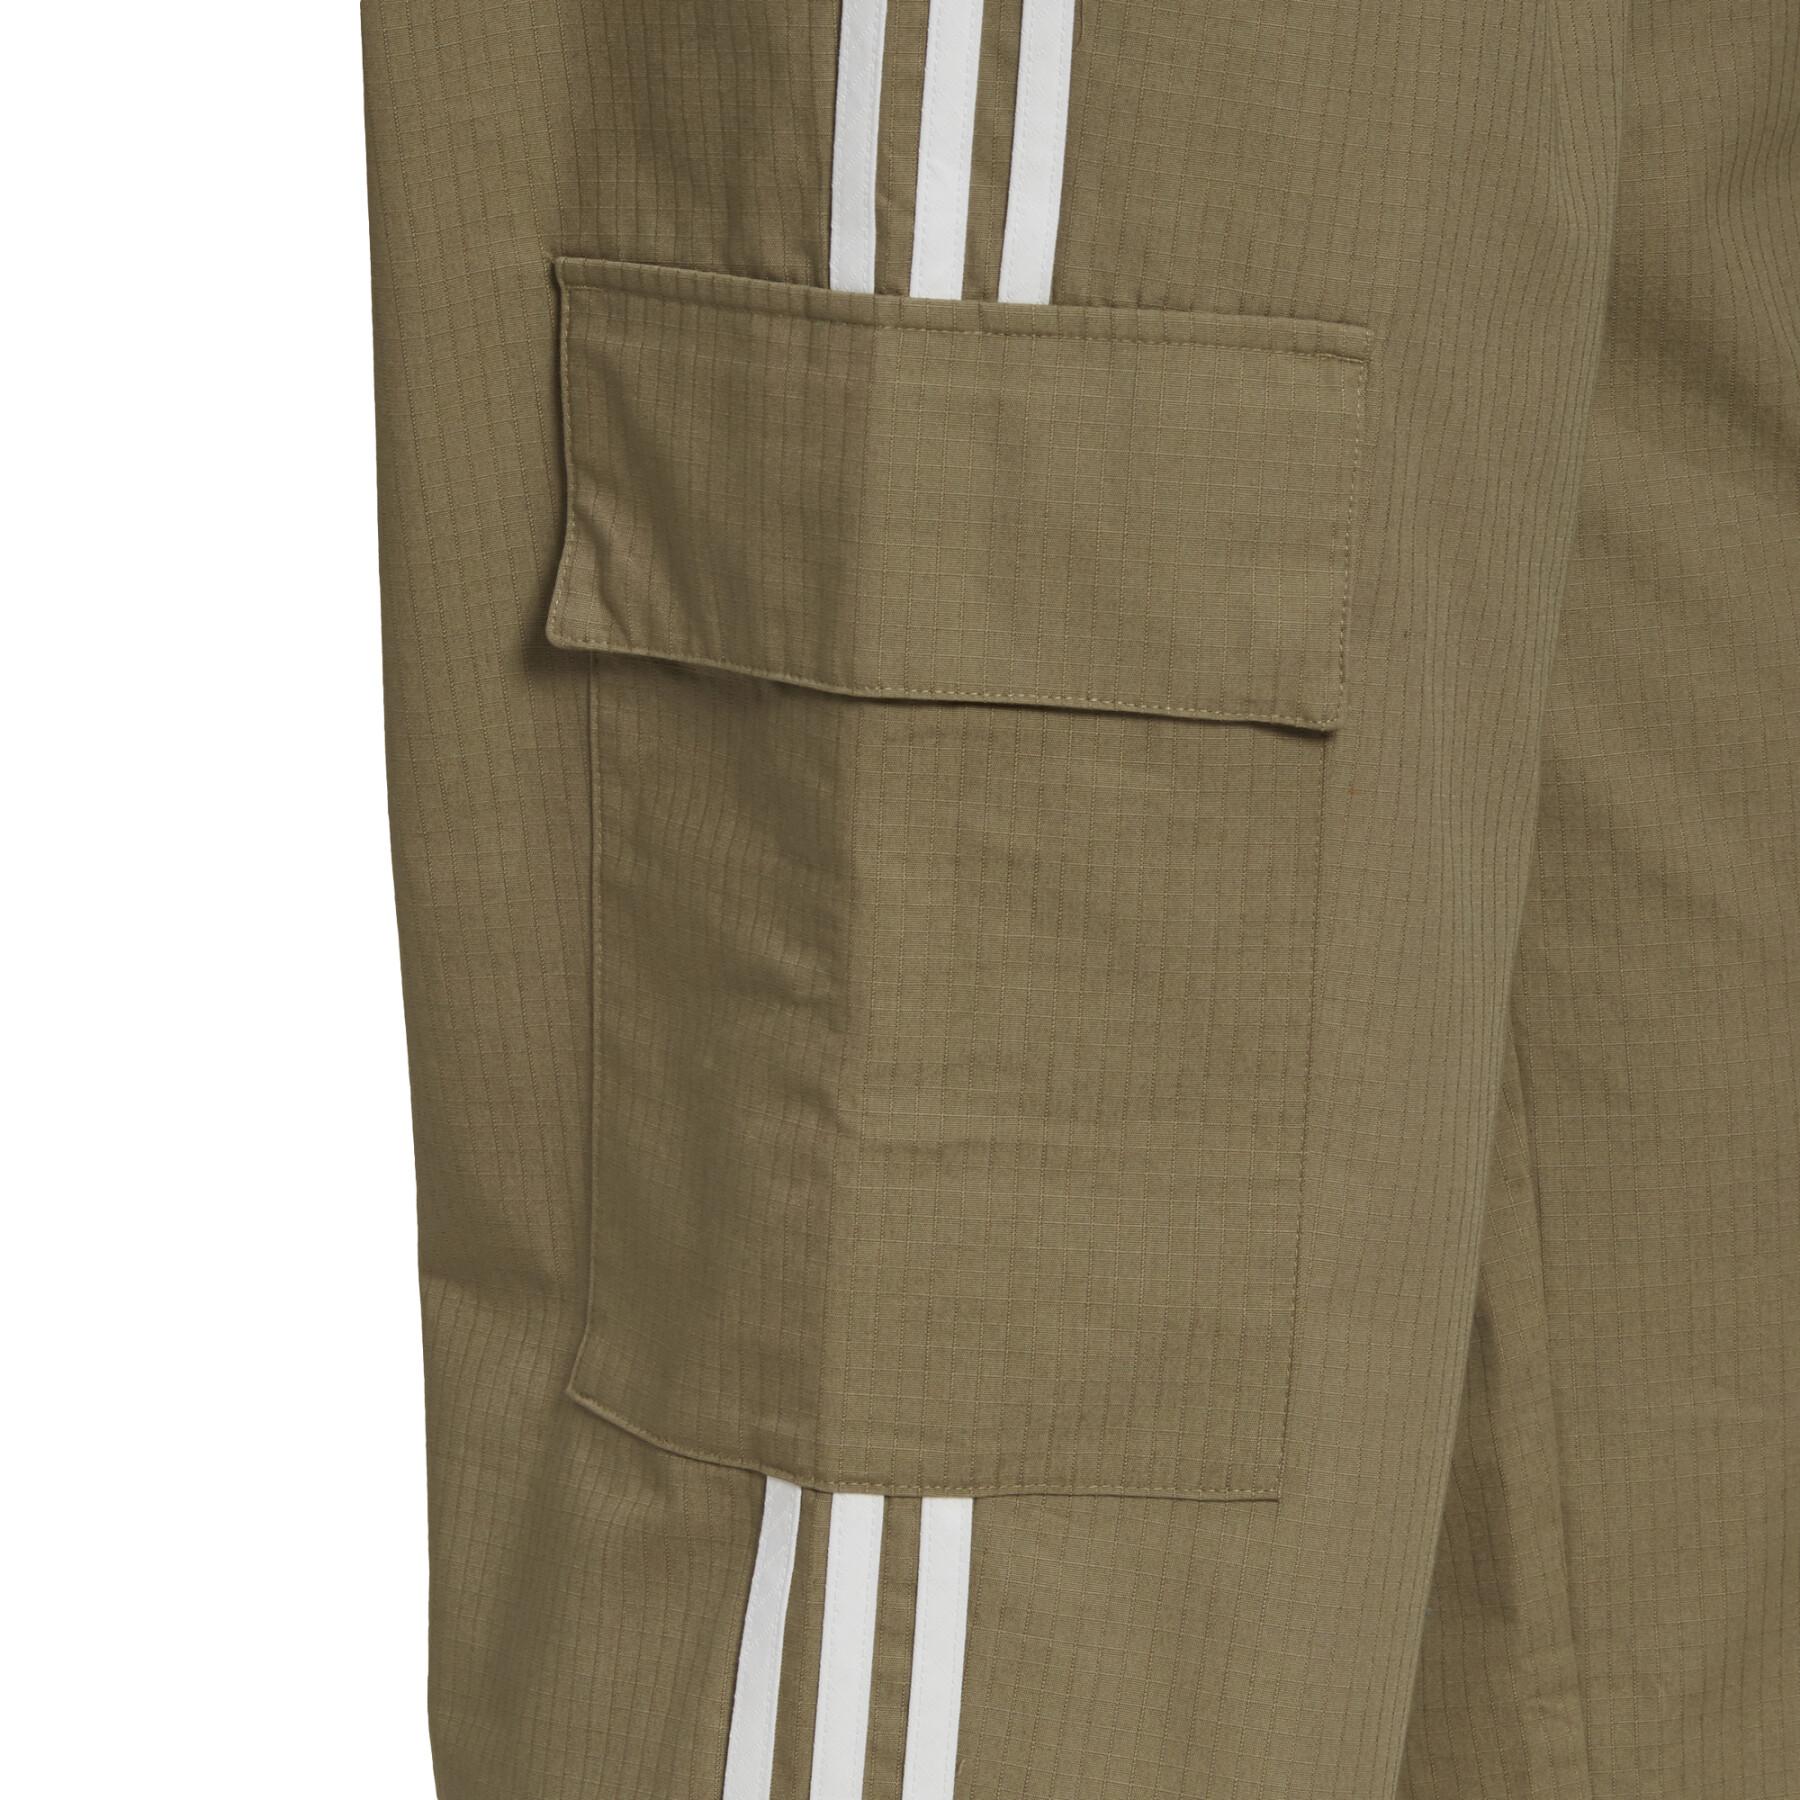 Pantalones de deporte adidas Originals Adicolor 3-Stripes